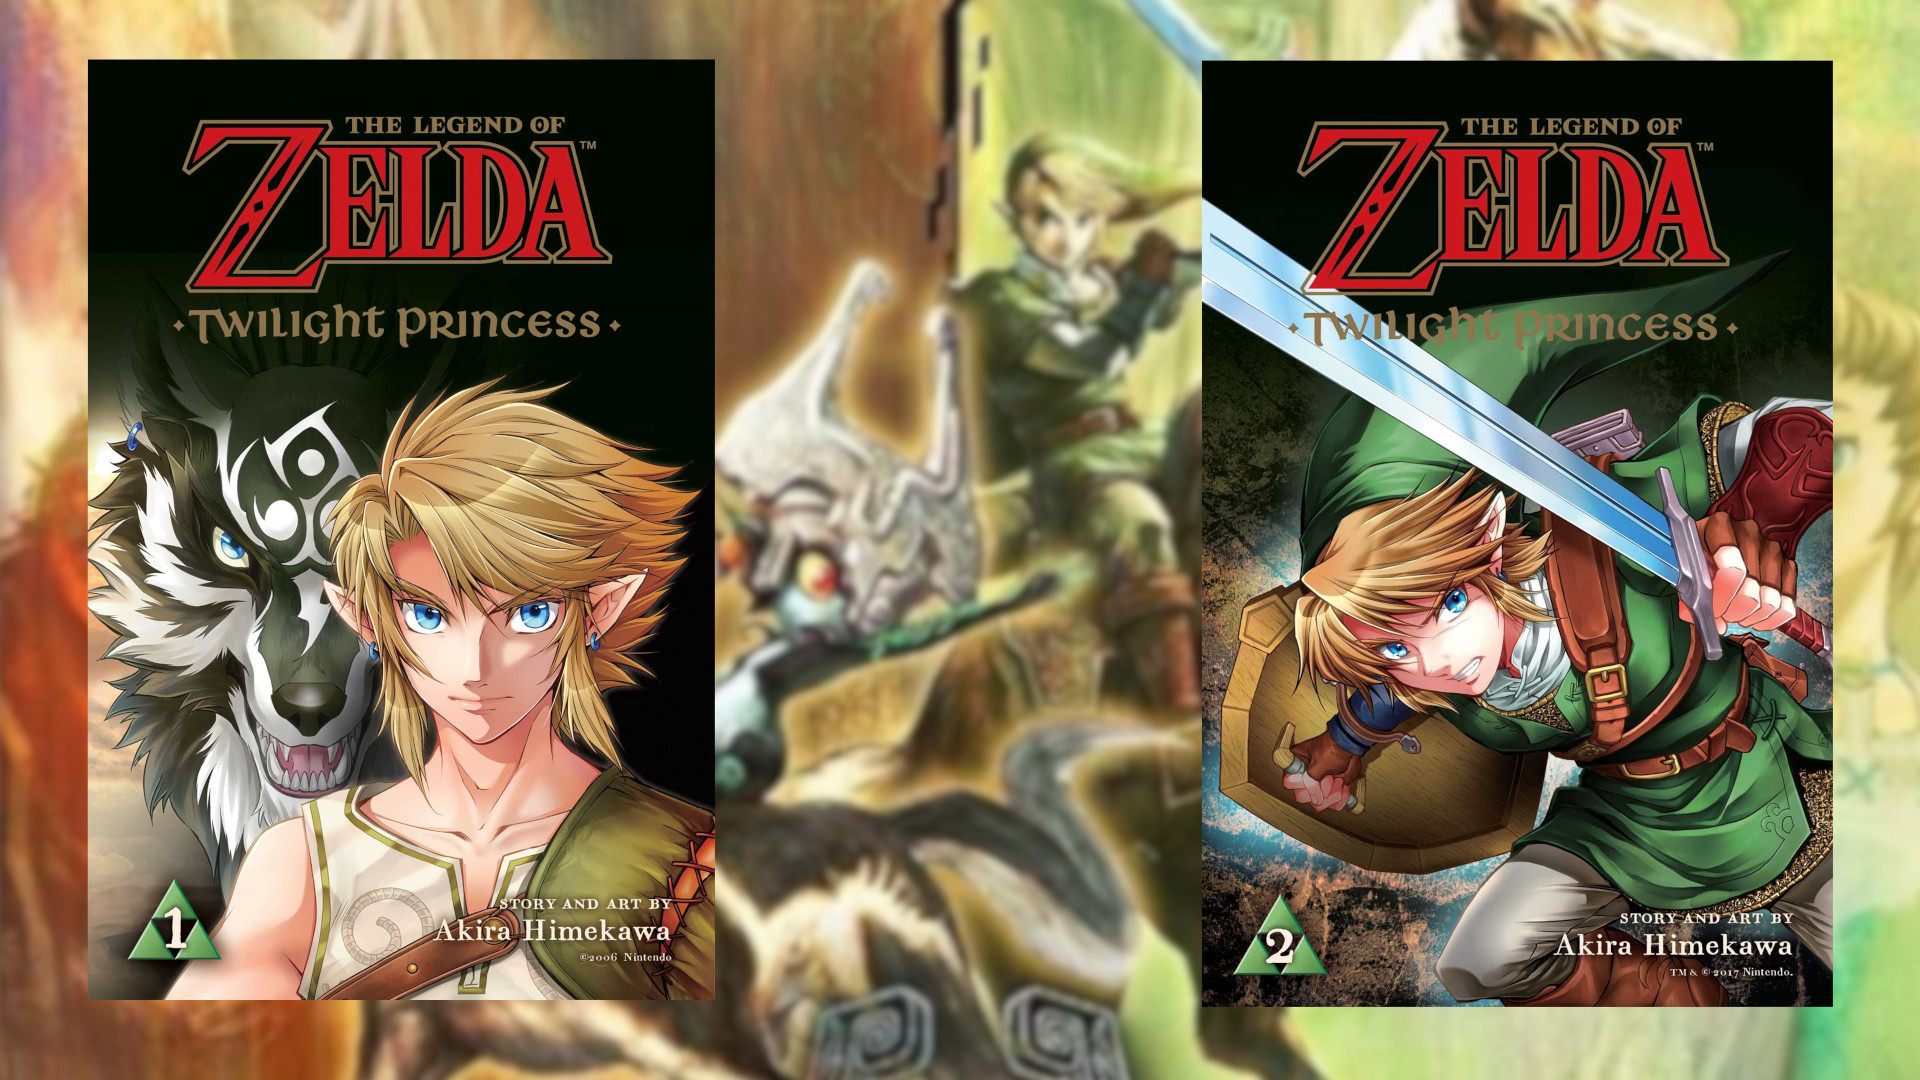 Manga - Zelda Ocarina of Time 1 & 2